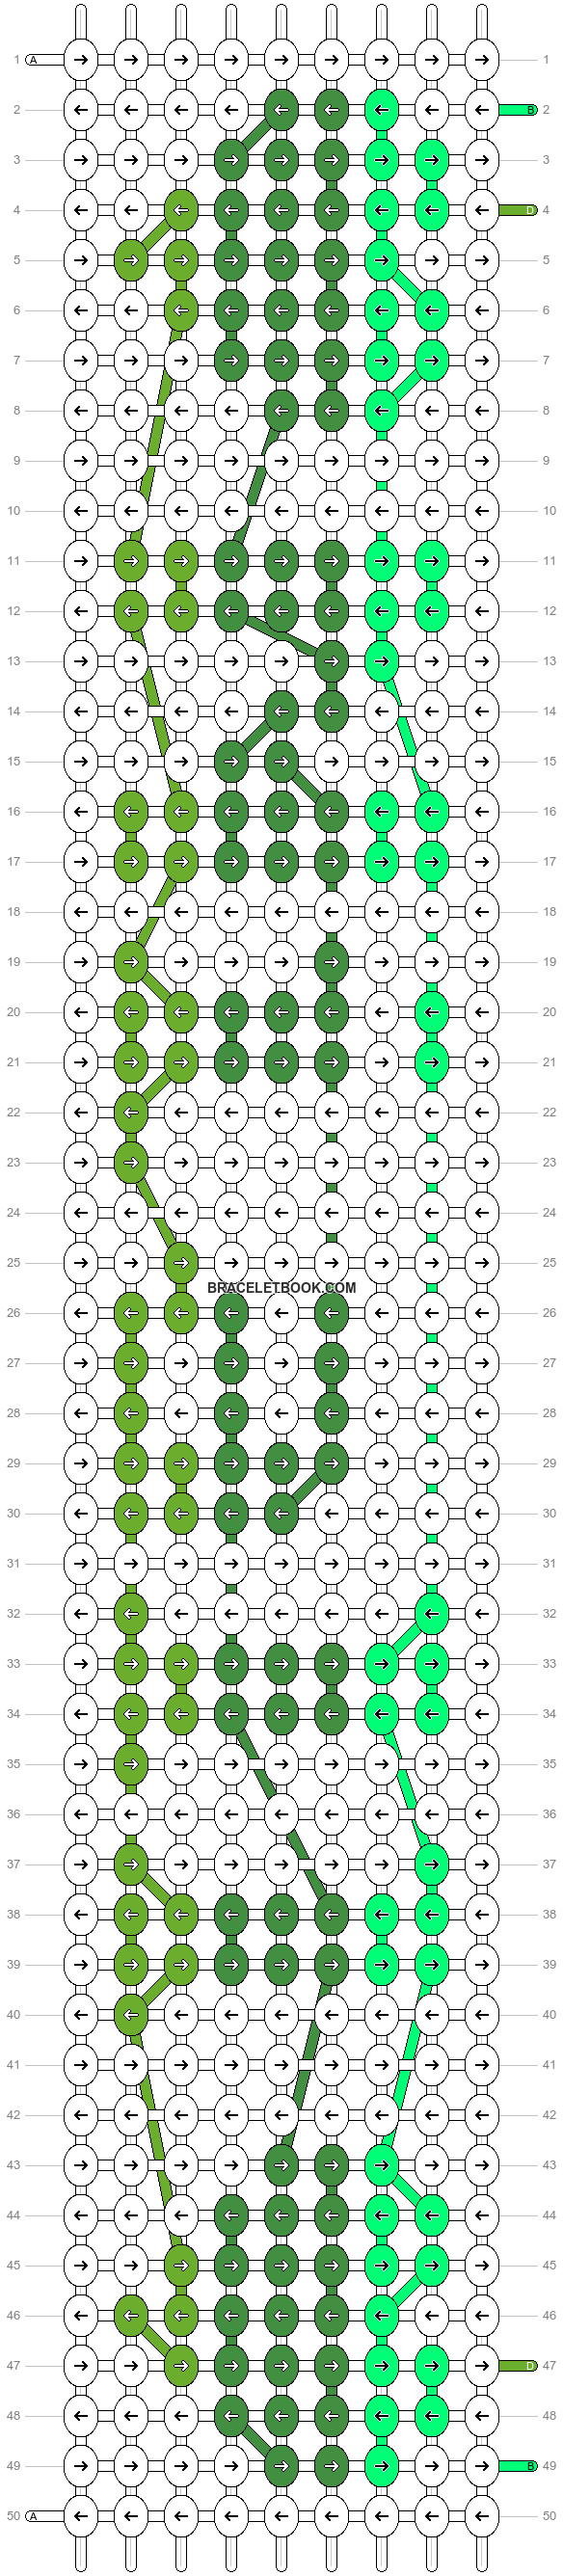 Alpha pattern #5539 variation #85995 pattern